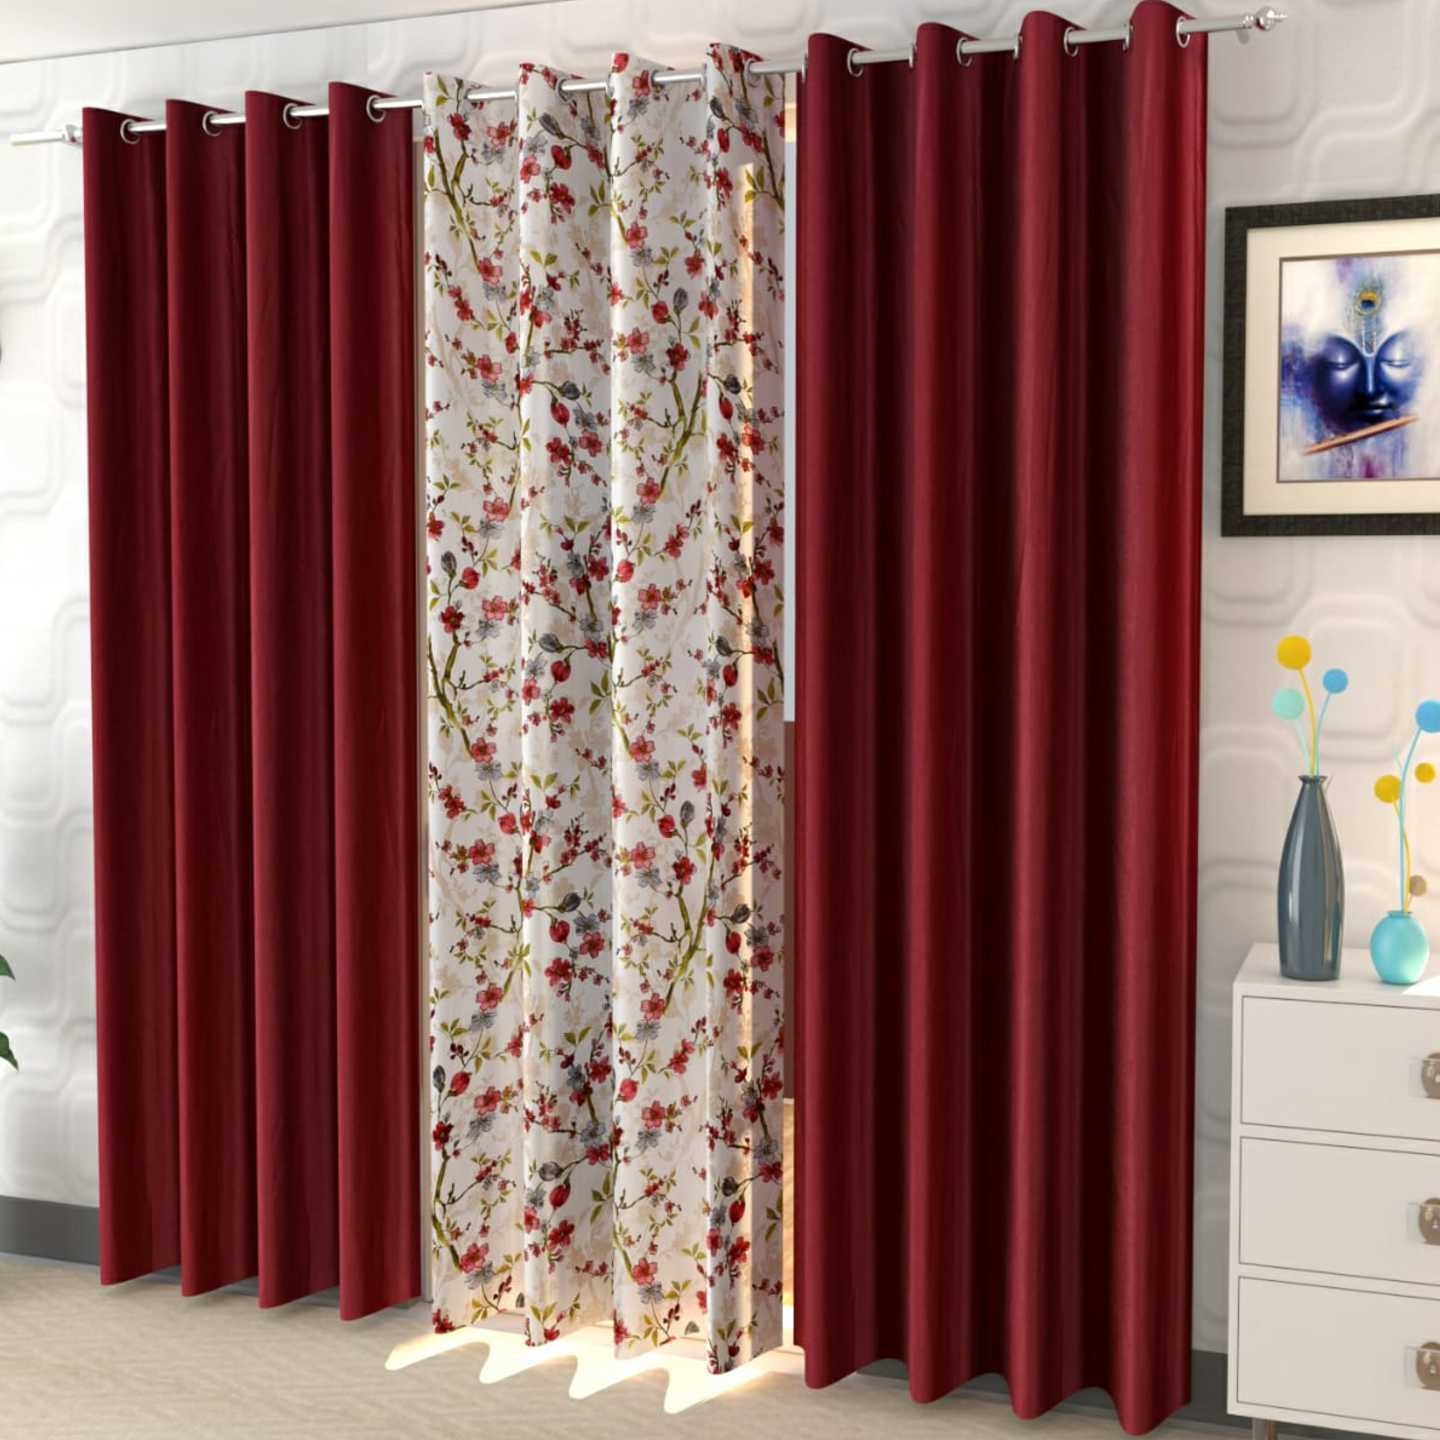 Handtex Home Polyester Digital Print Eyelet Curtain Set of 3 Pcs 4feet x 7feet Maroon